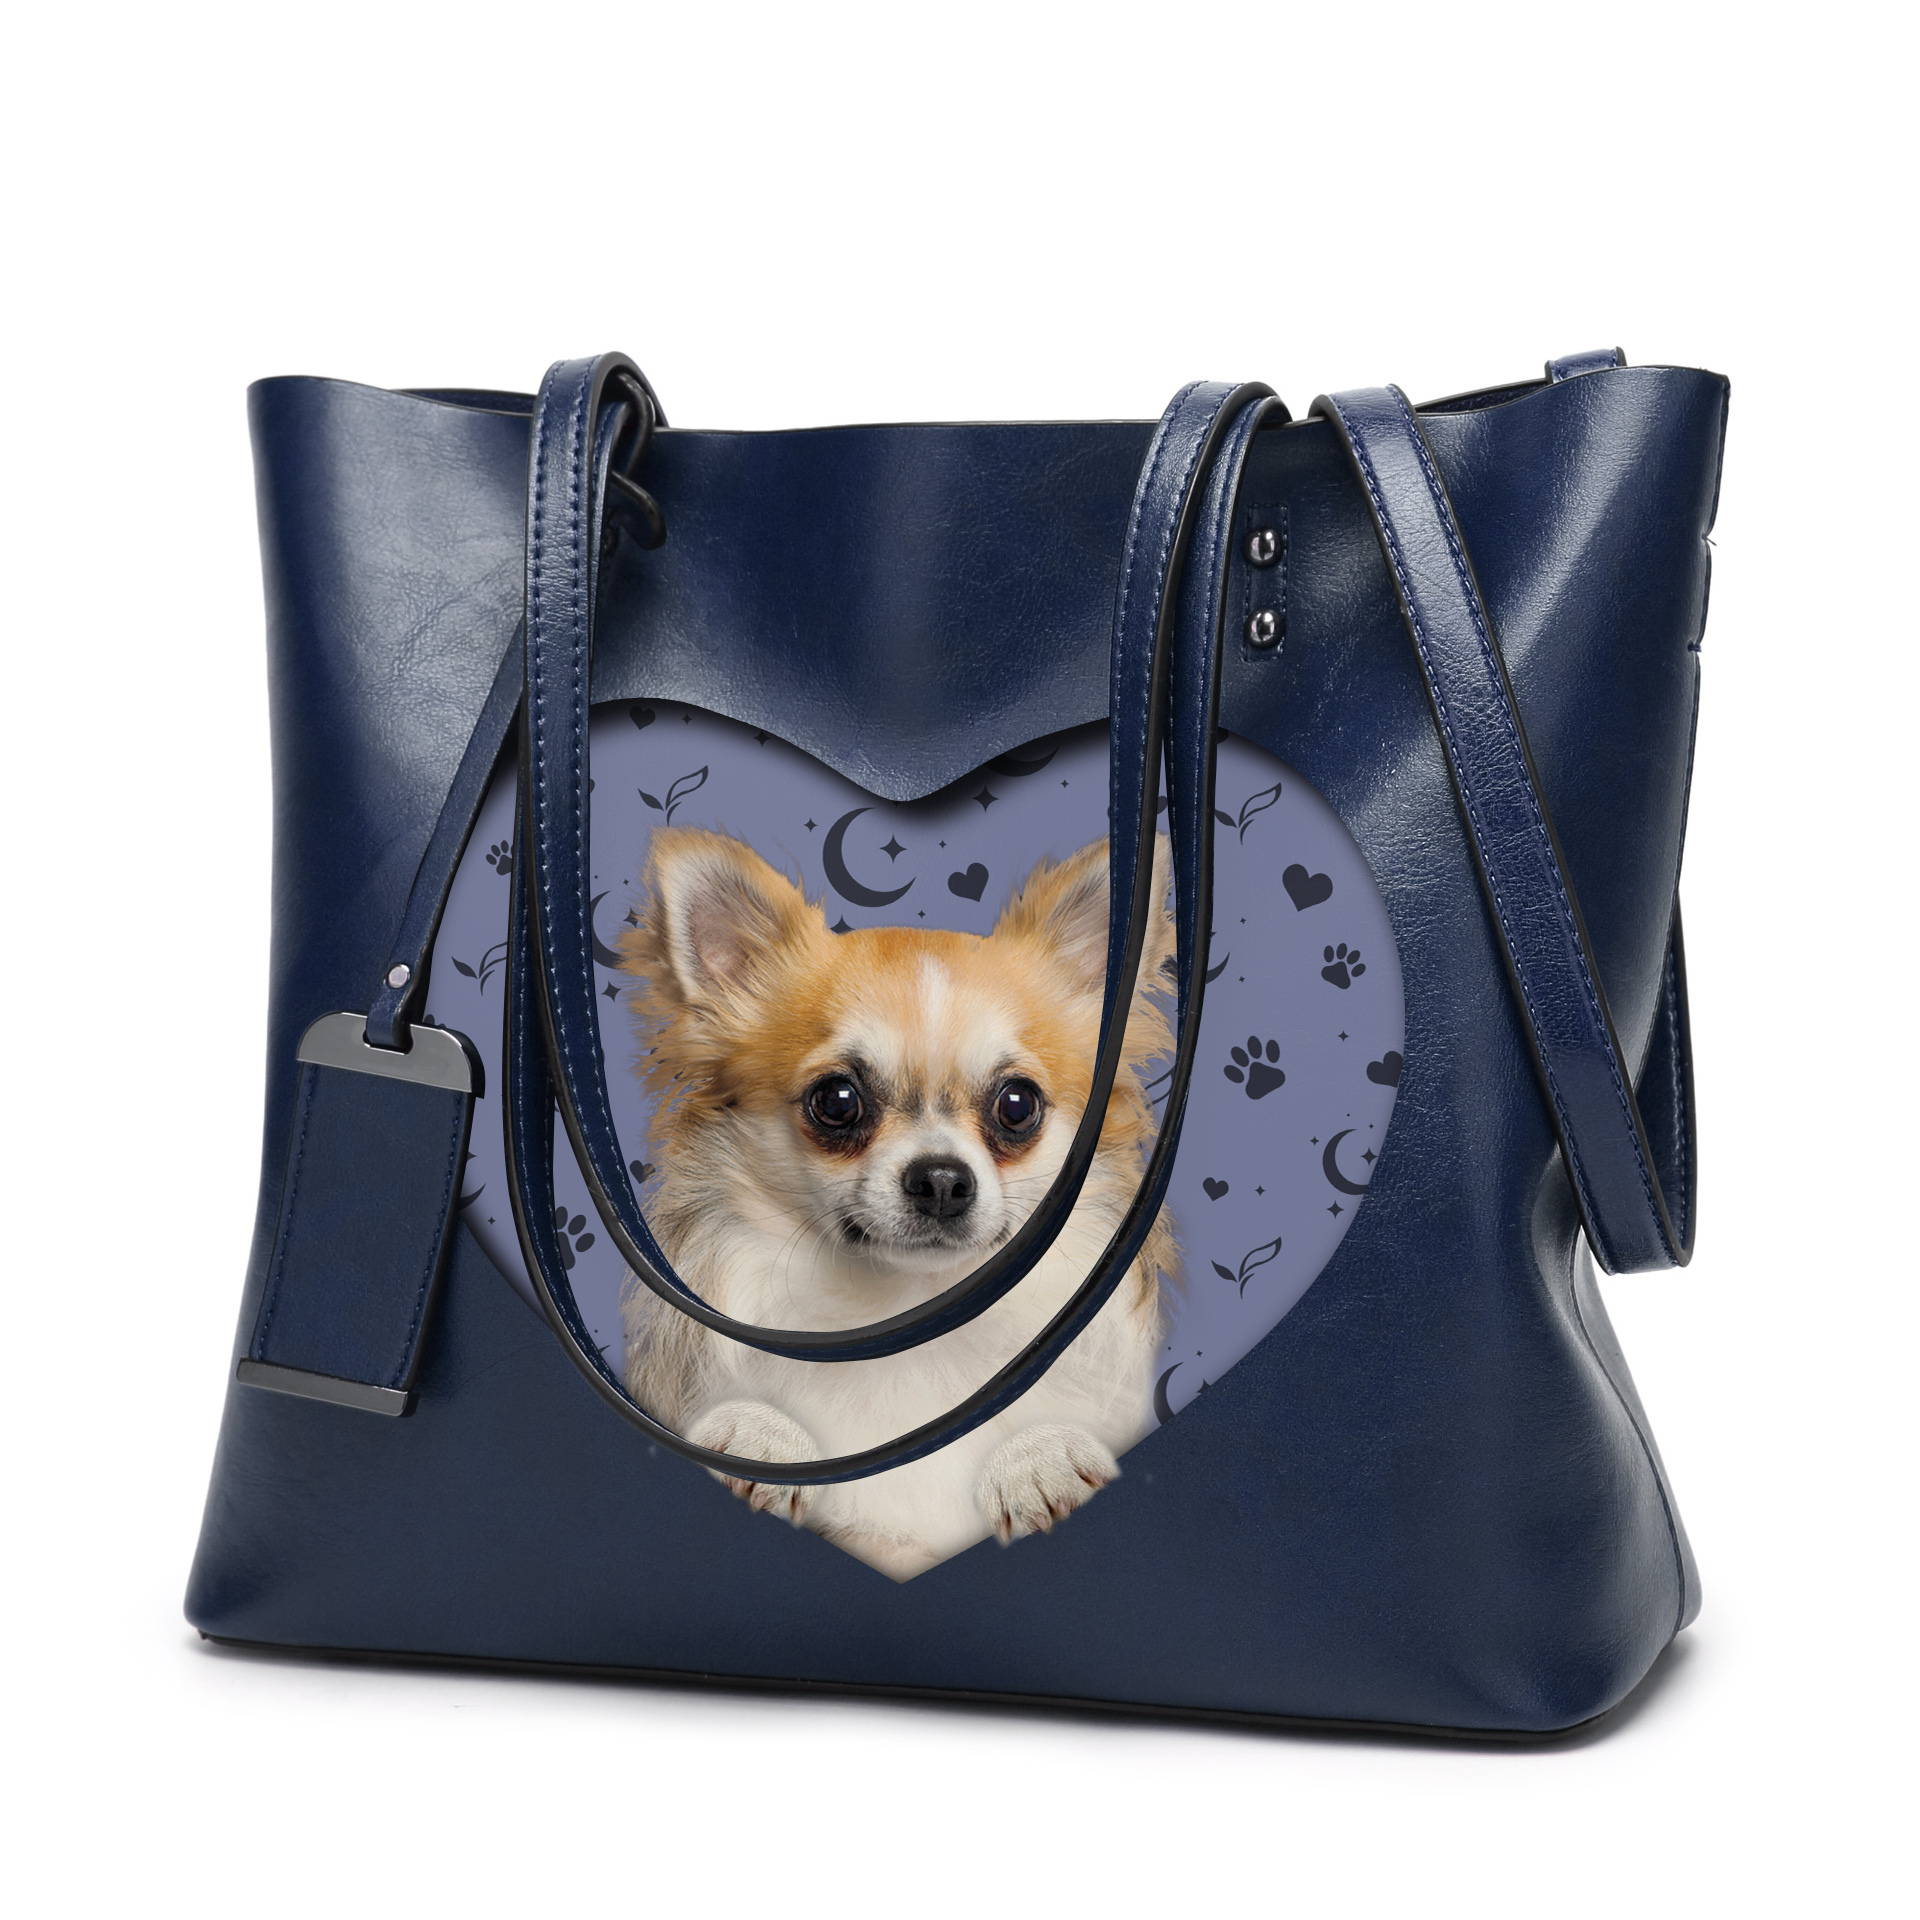 I Know I'm Cute - Chihuahua Glamour Handbag V4 - 10